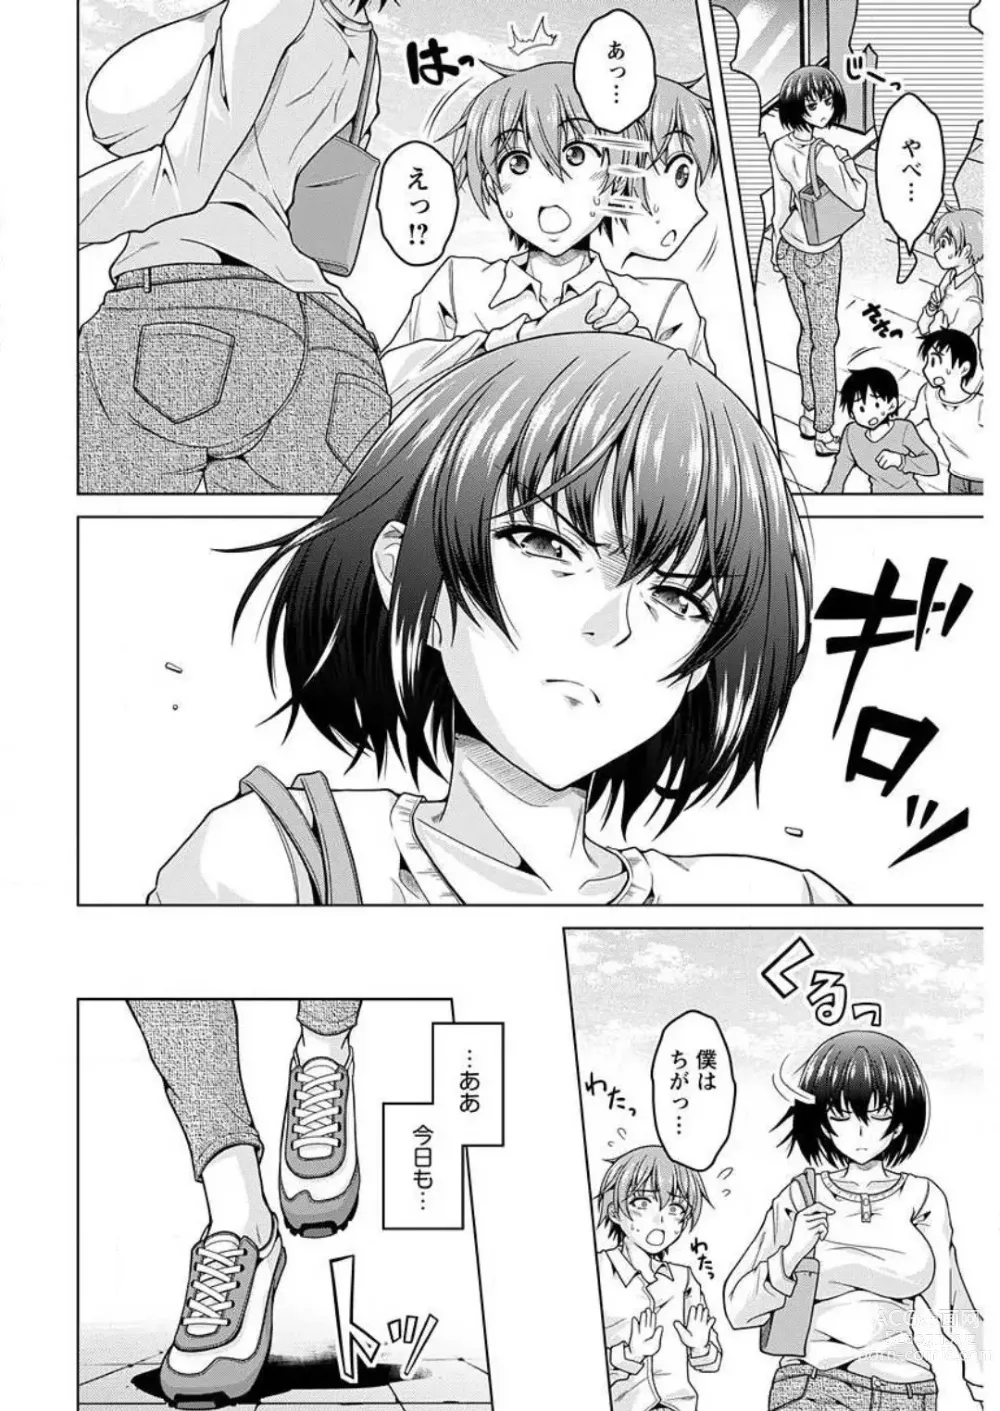 Page 2 of manga InCha Kanojo 185 Centi 1-2